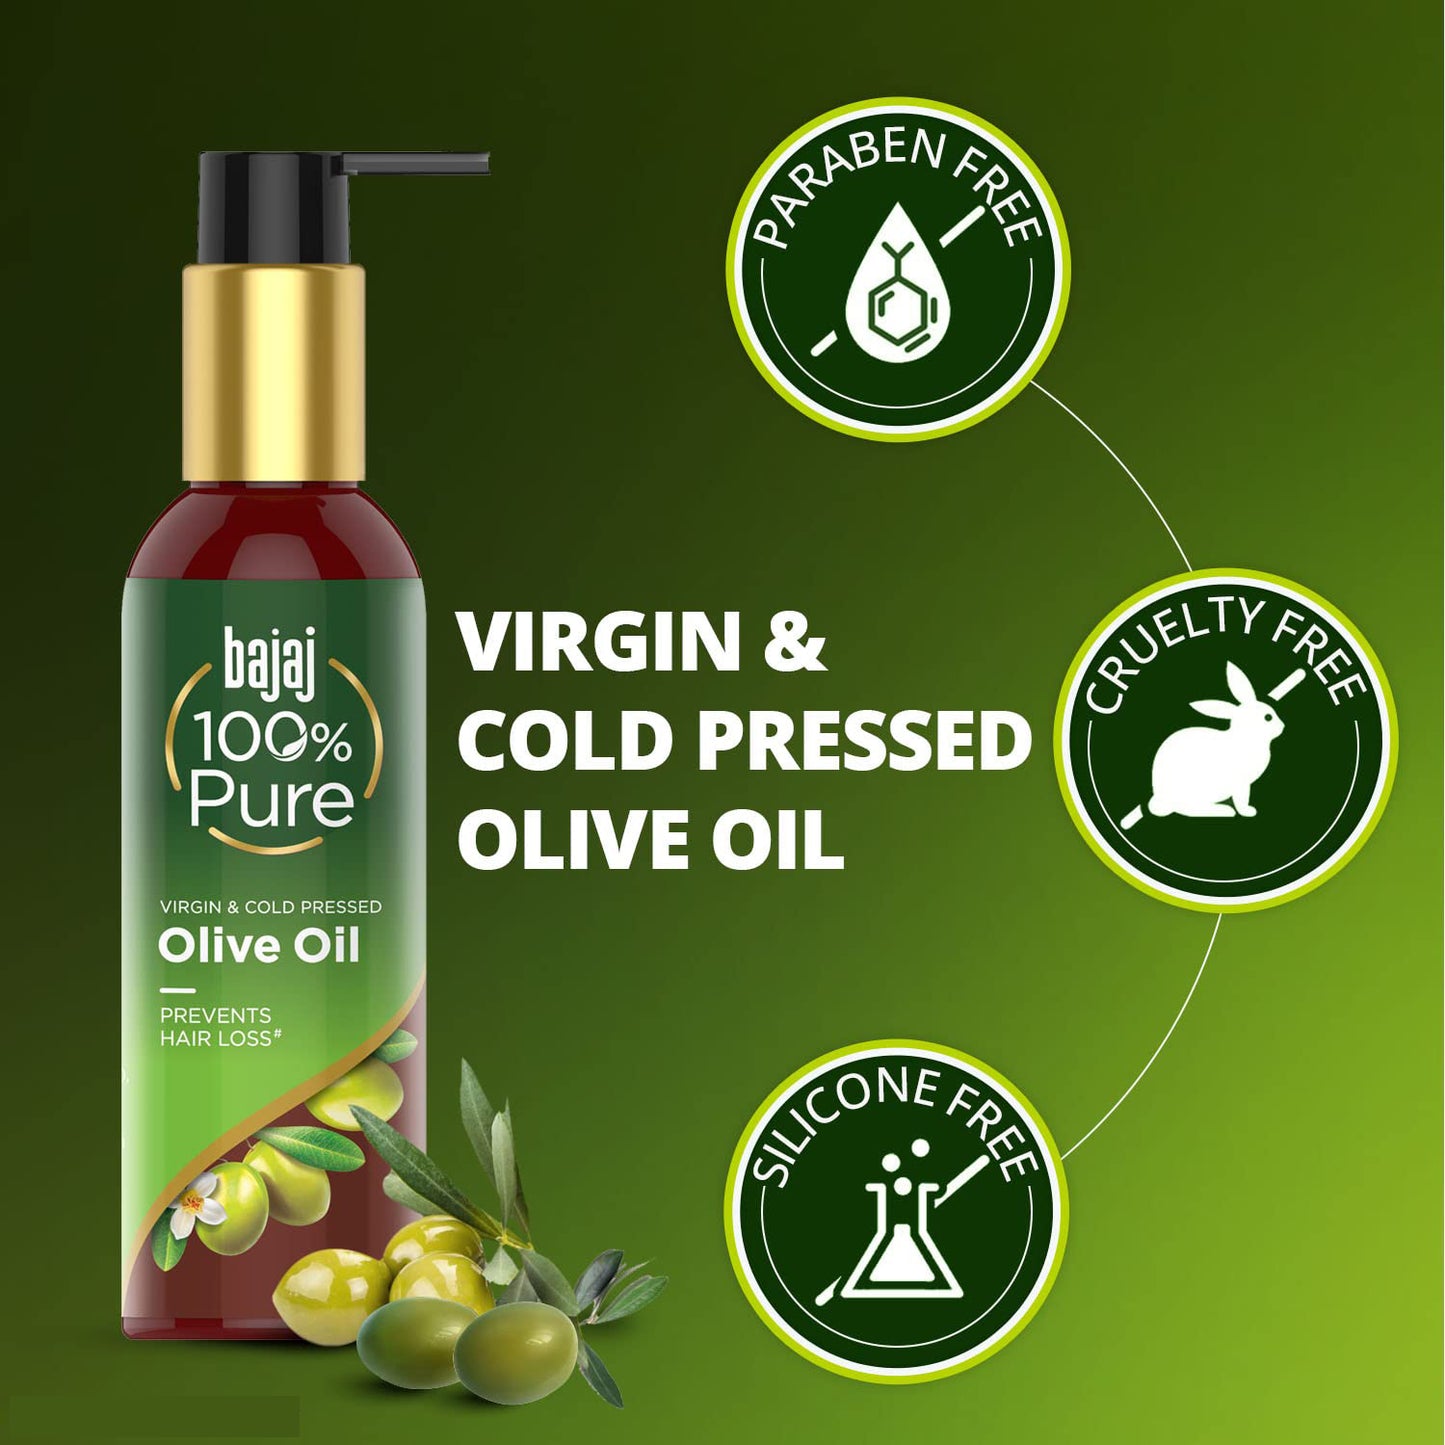 Bajaj 100% Pure Virgin & Cold Pressed Olive Oil 200ml Pack Of 2